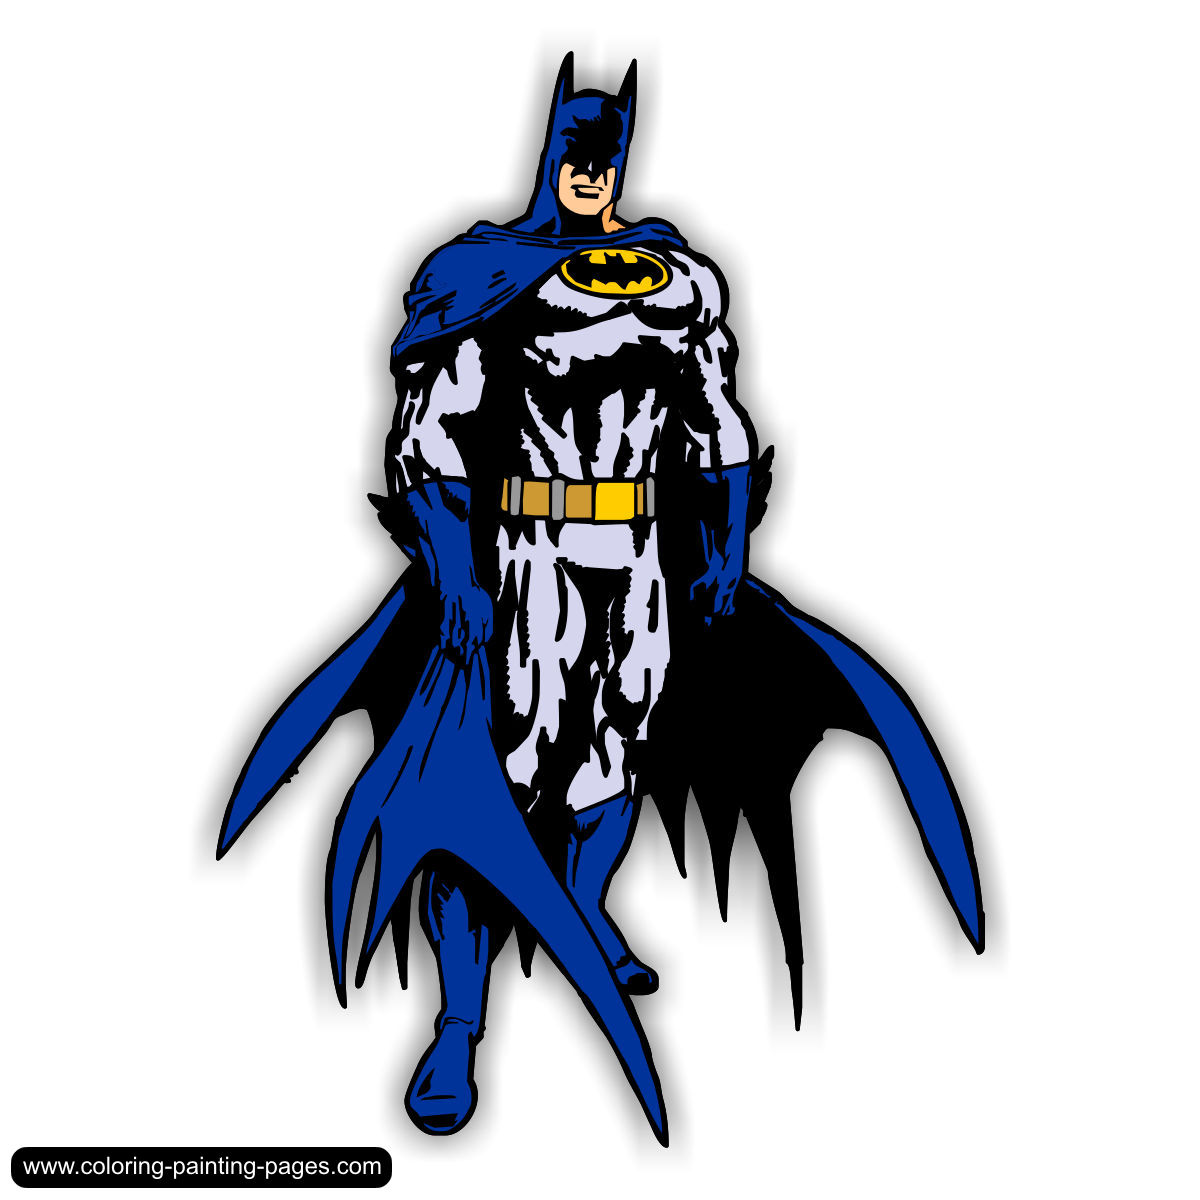 Batman clipart free clip art image image